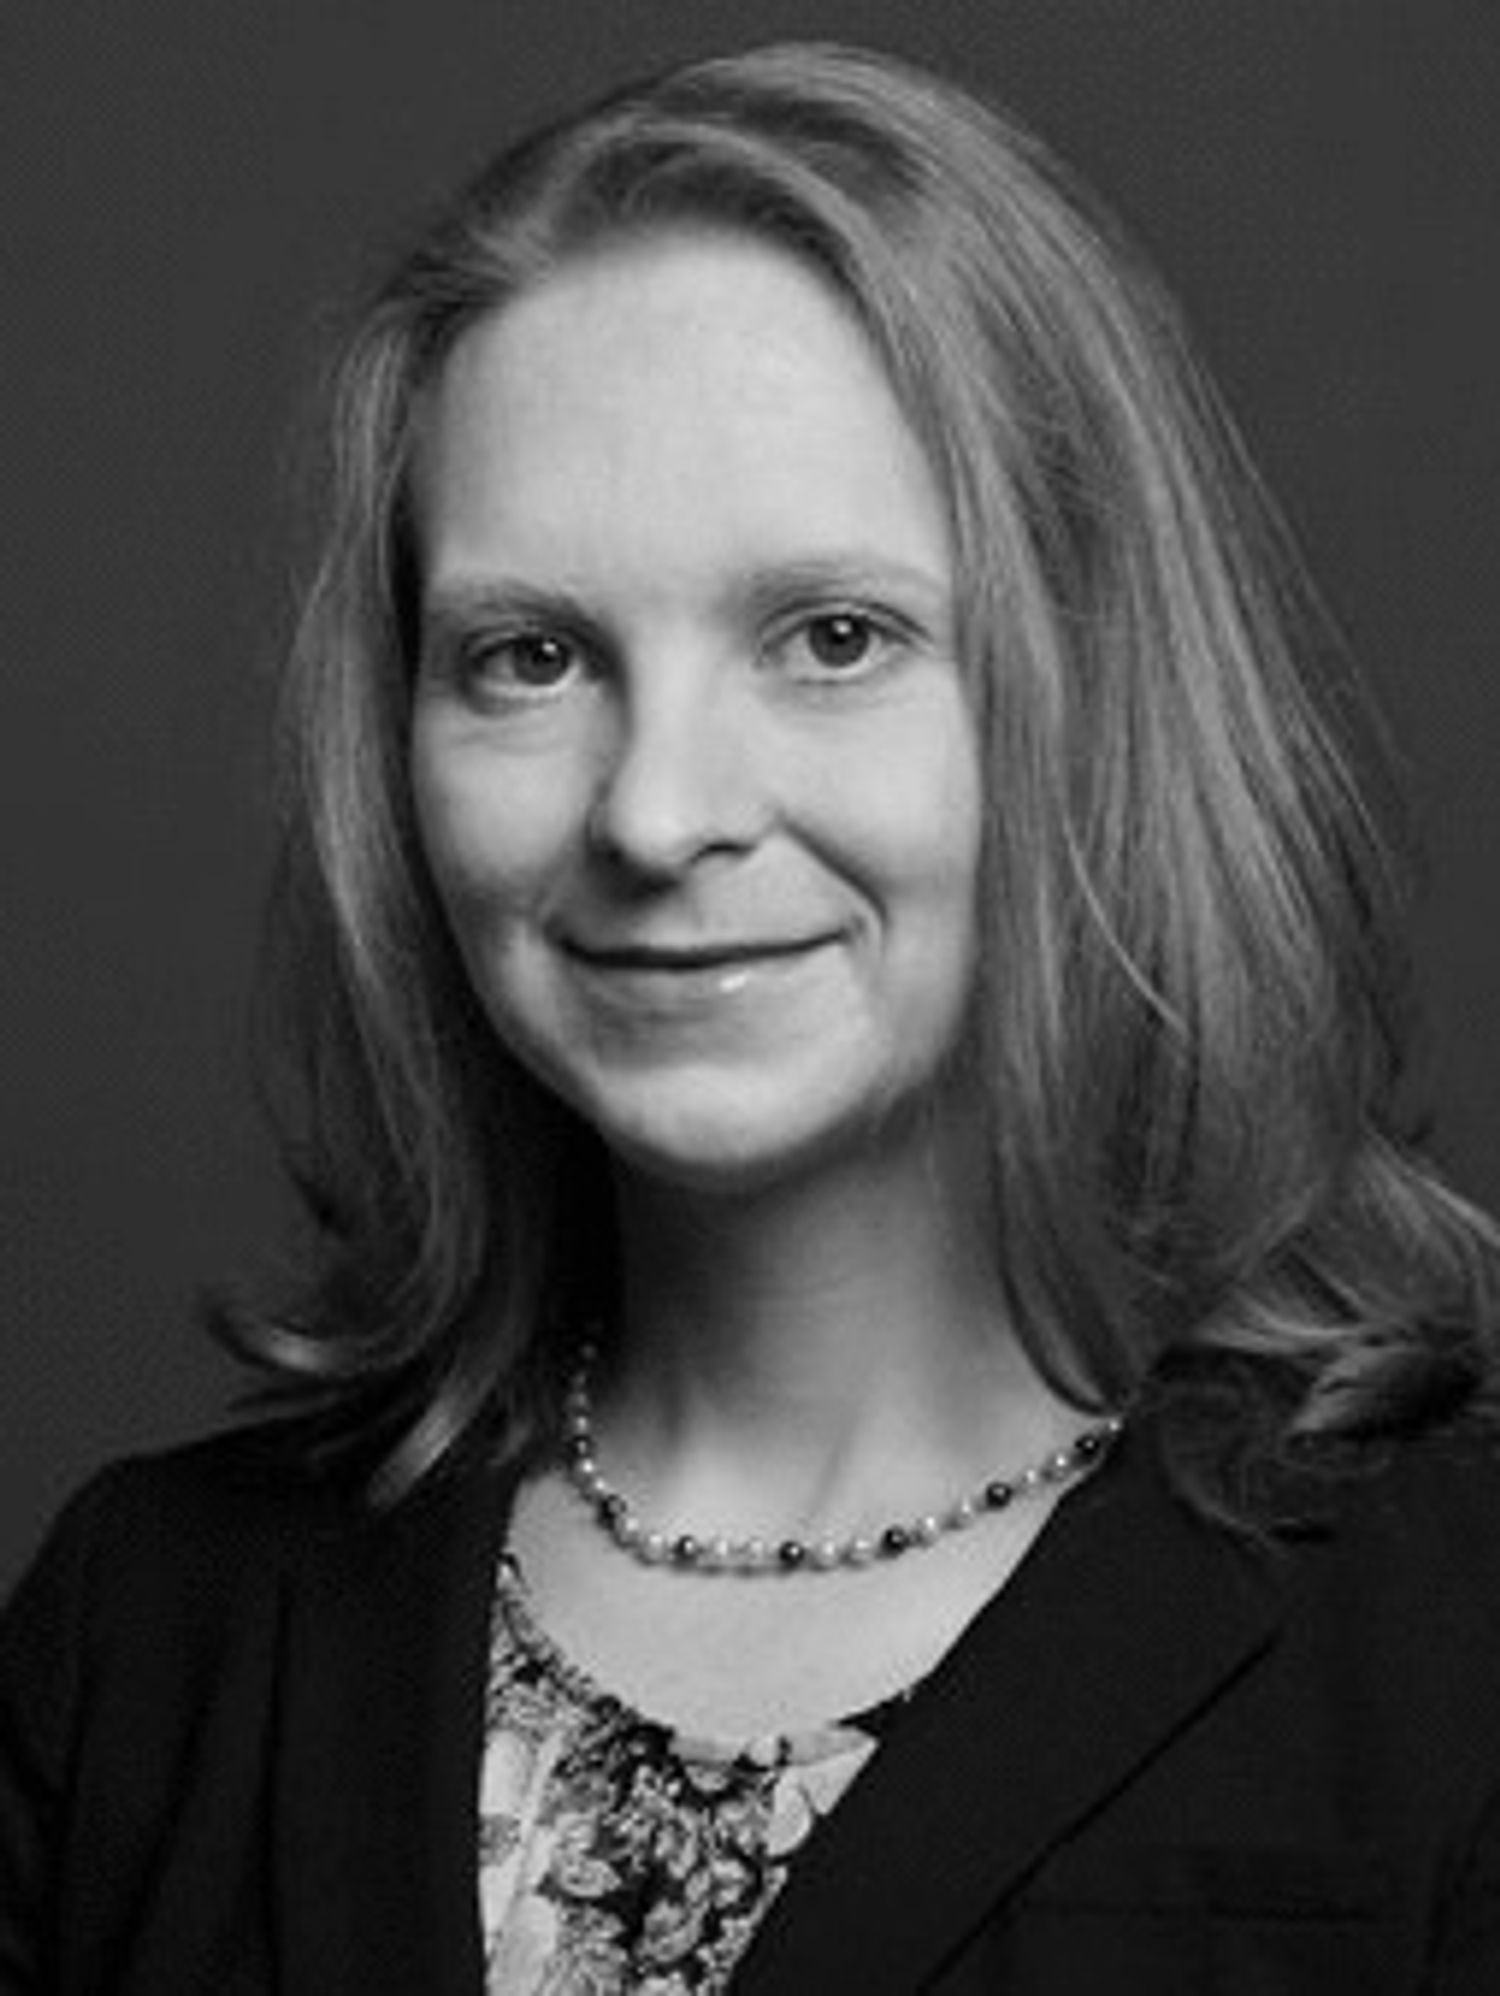 Caitlin Dean, Head of Financial & Professional Services, Eurasia Group